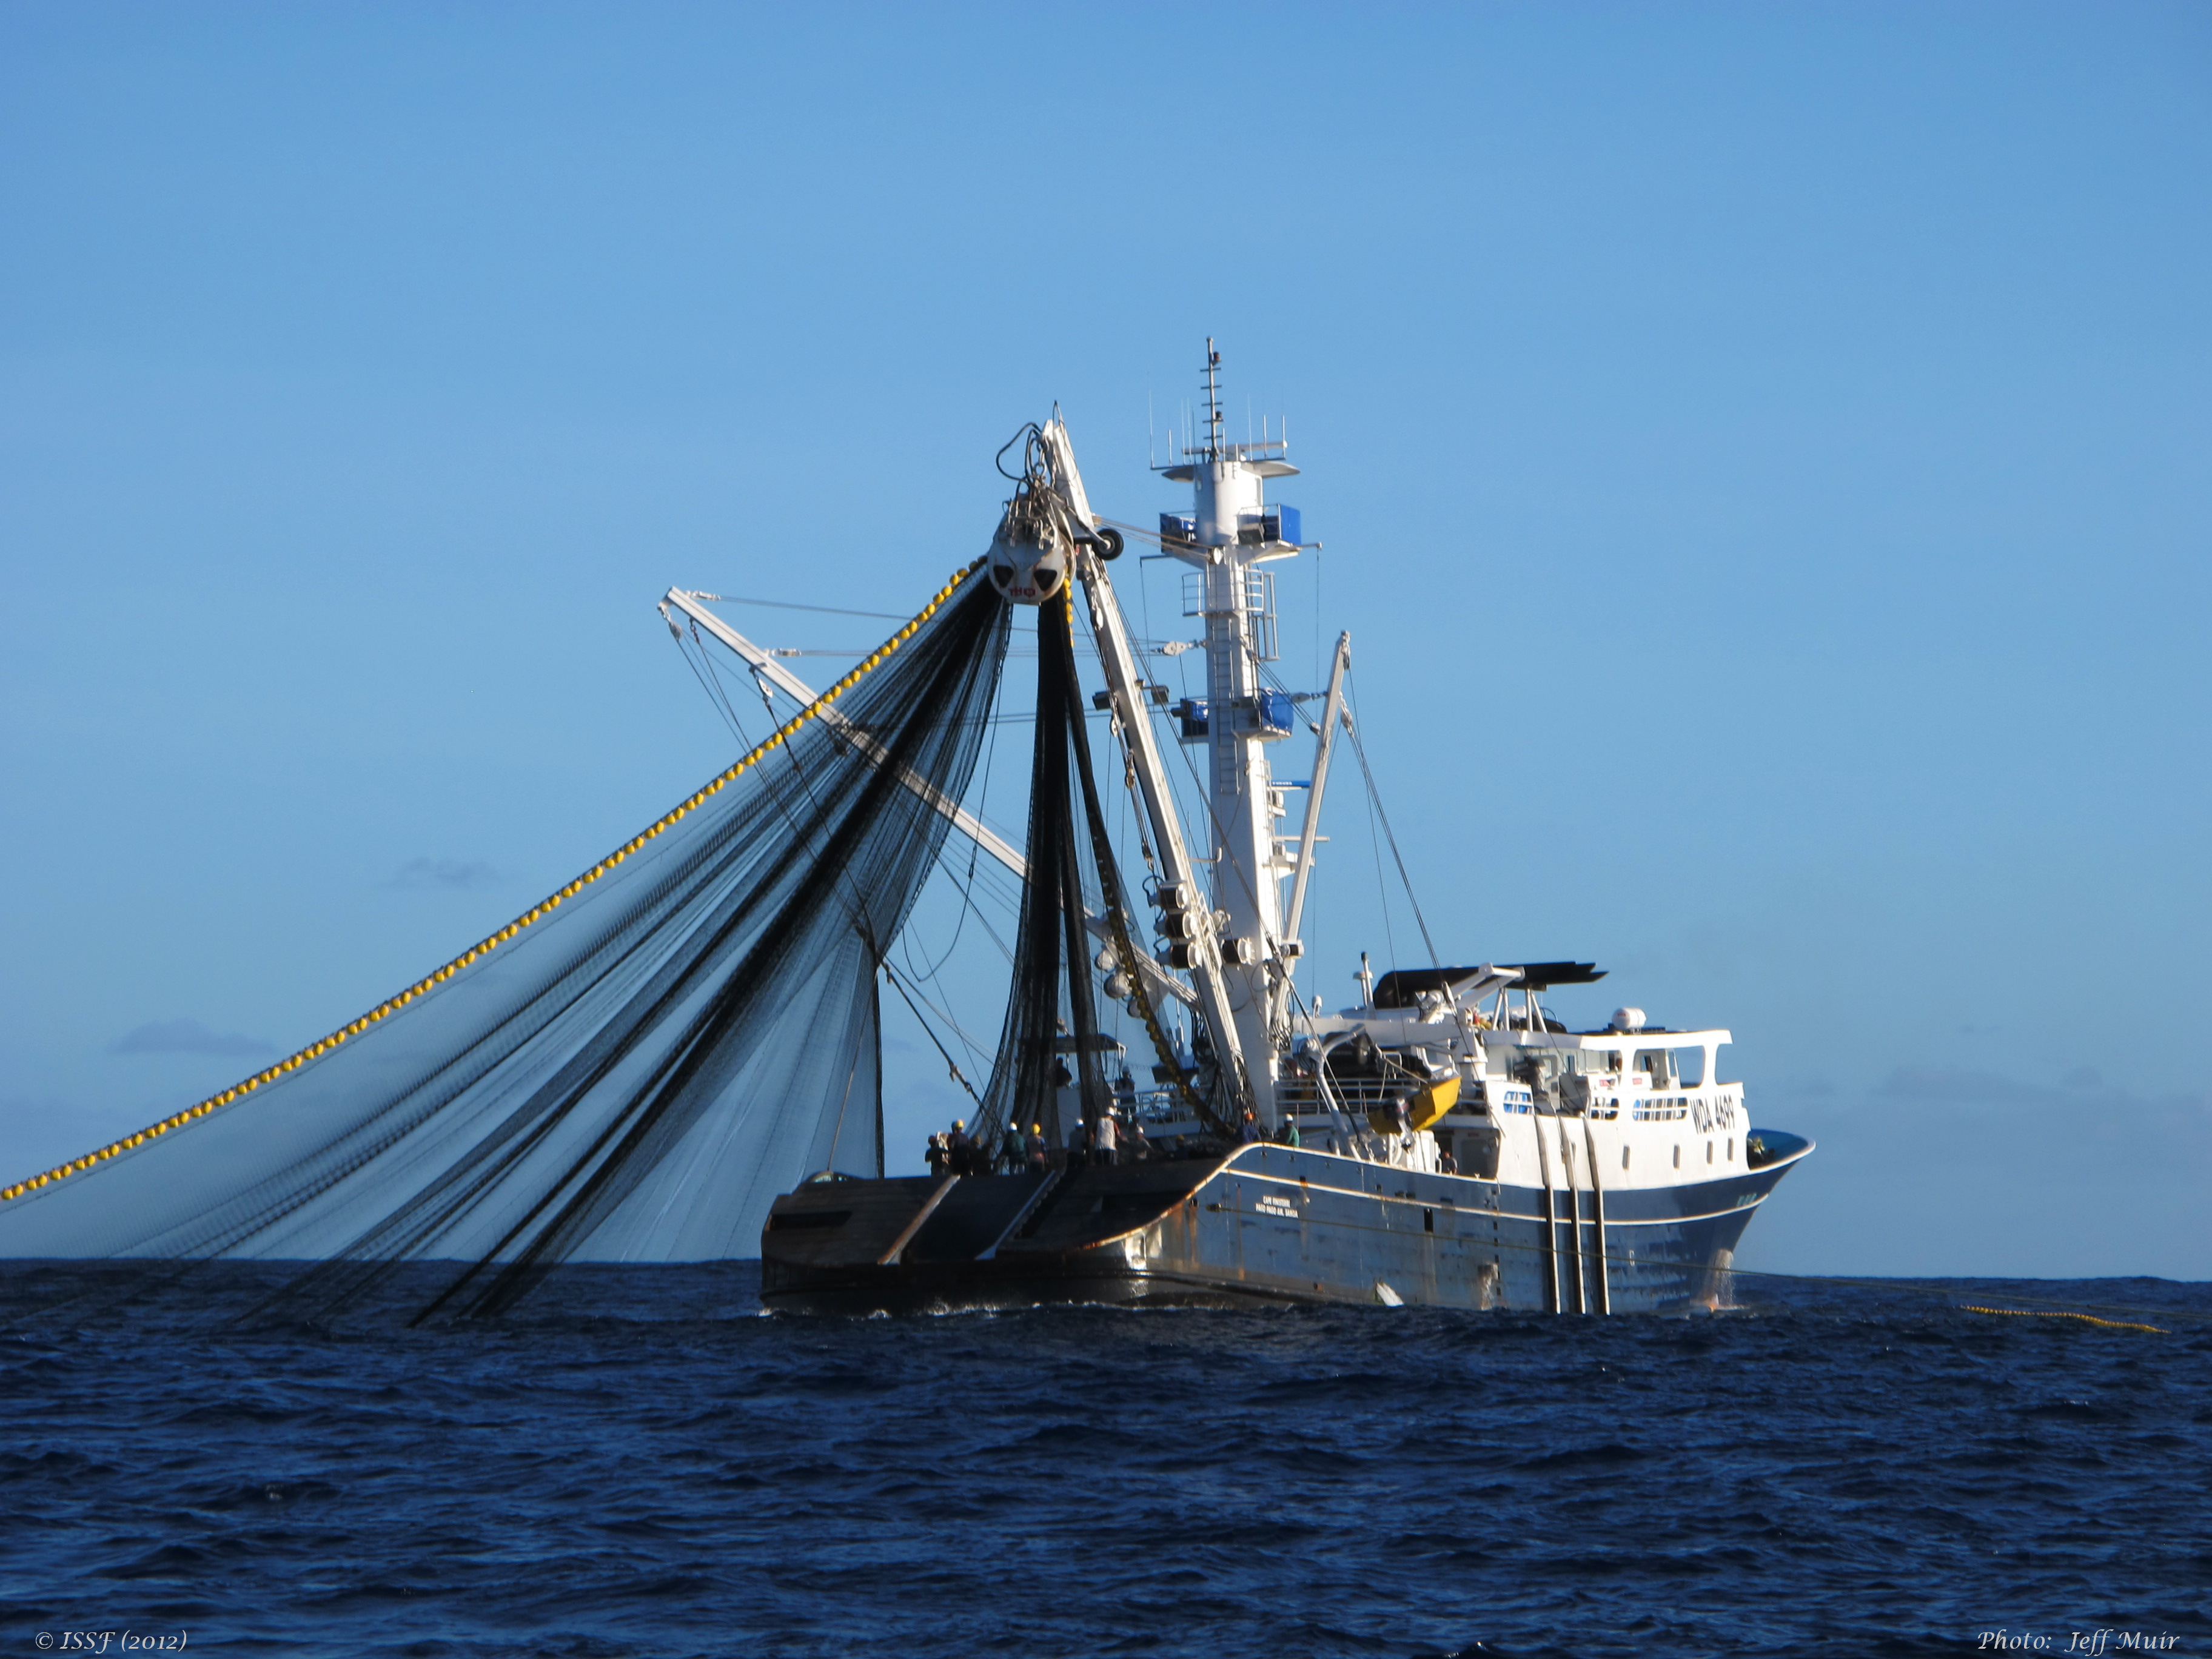 Catching those Tuna: The challenges of purse seine versus longline tuna  fishing | Green Fish Blue Fish